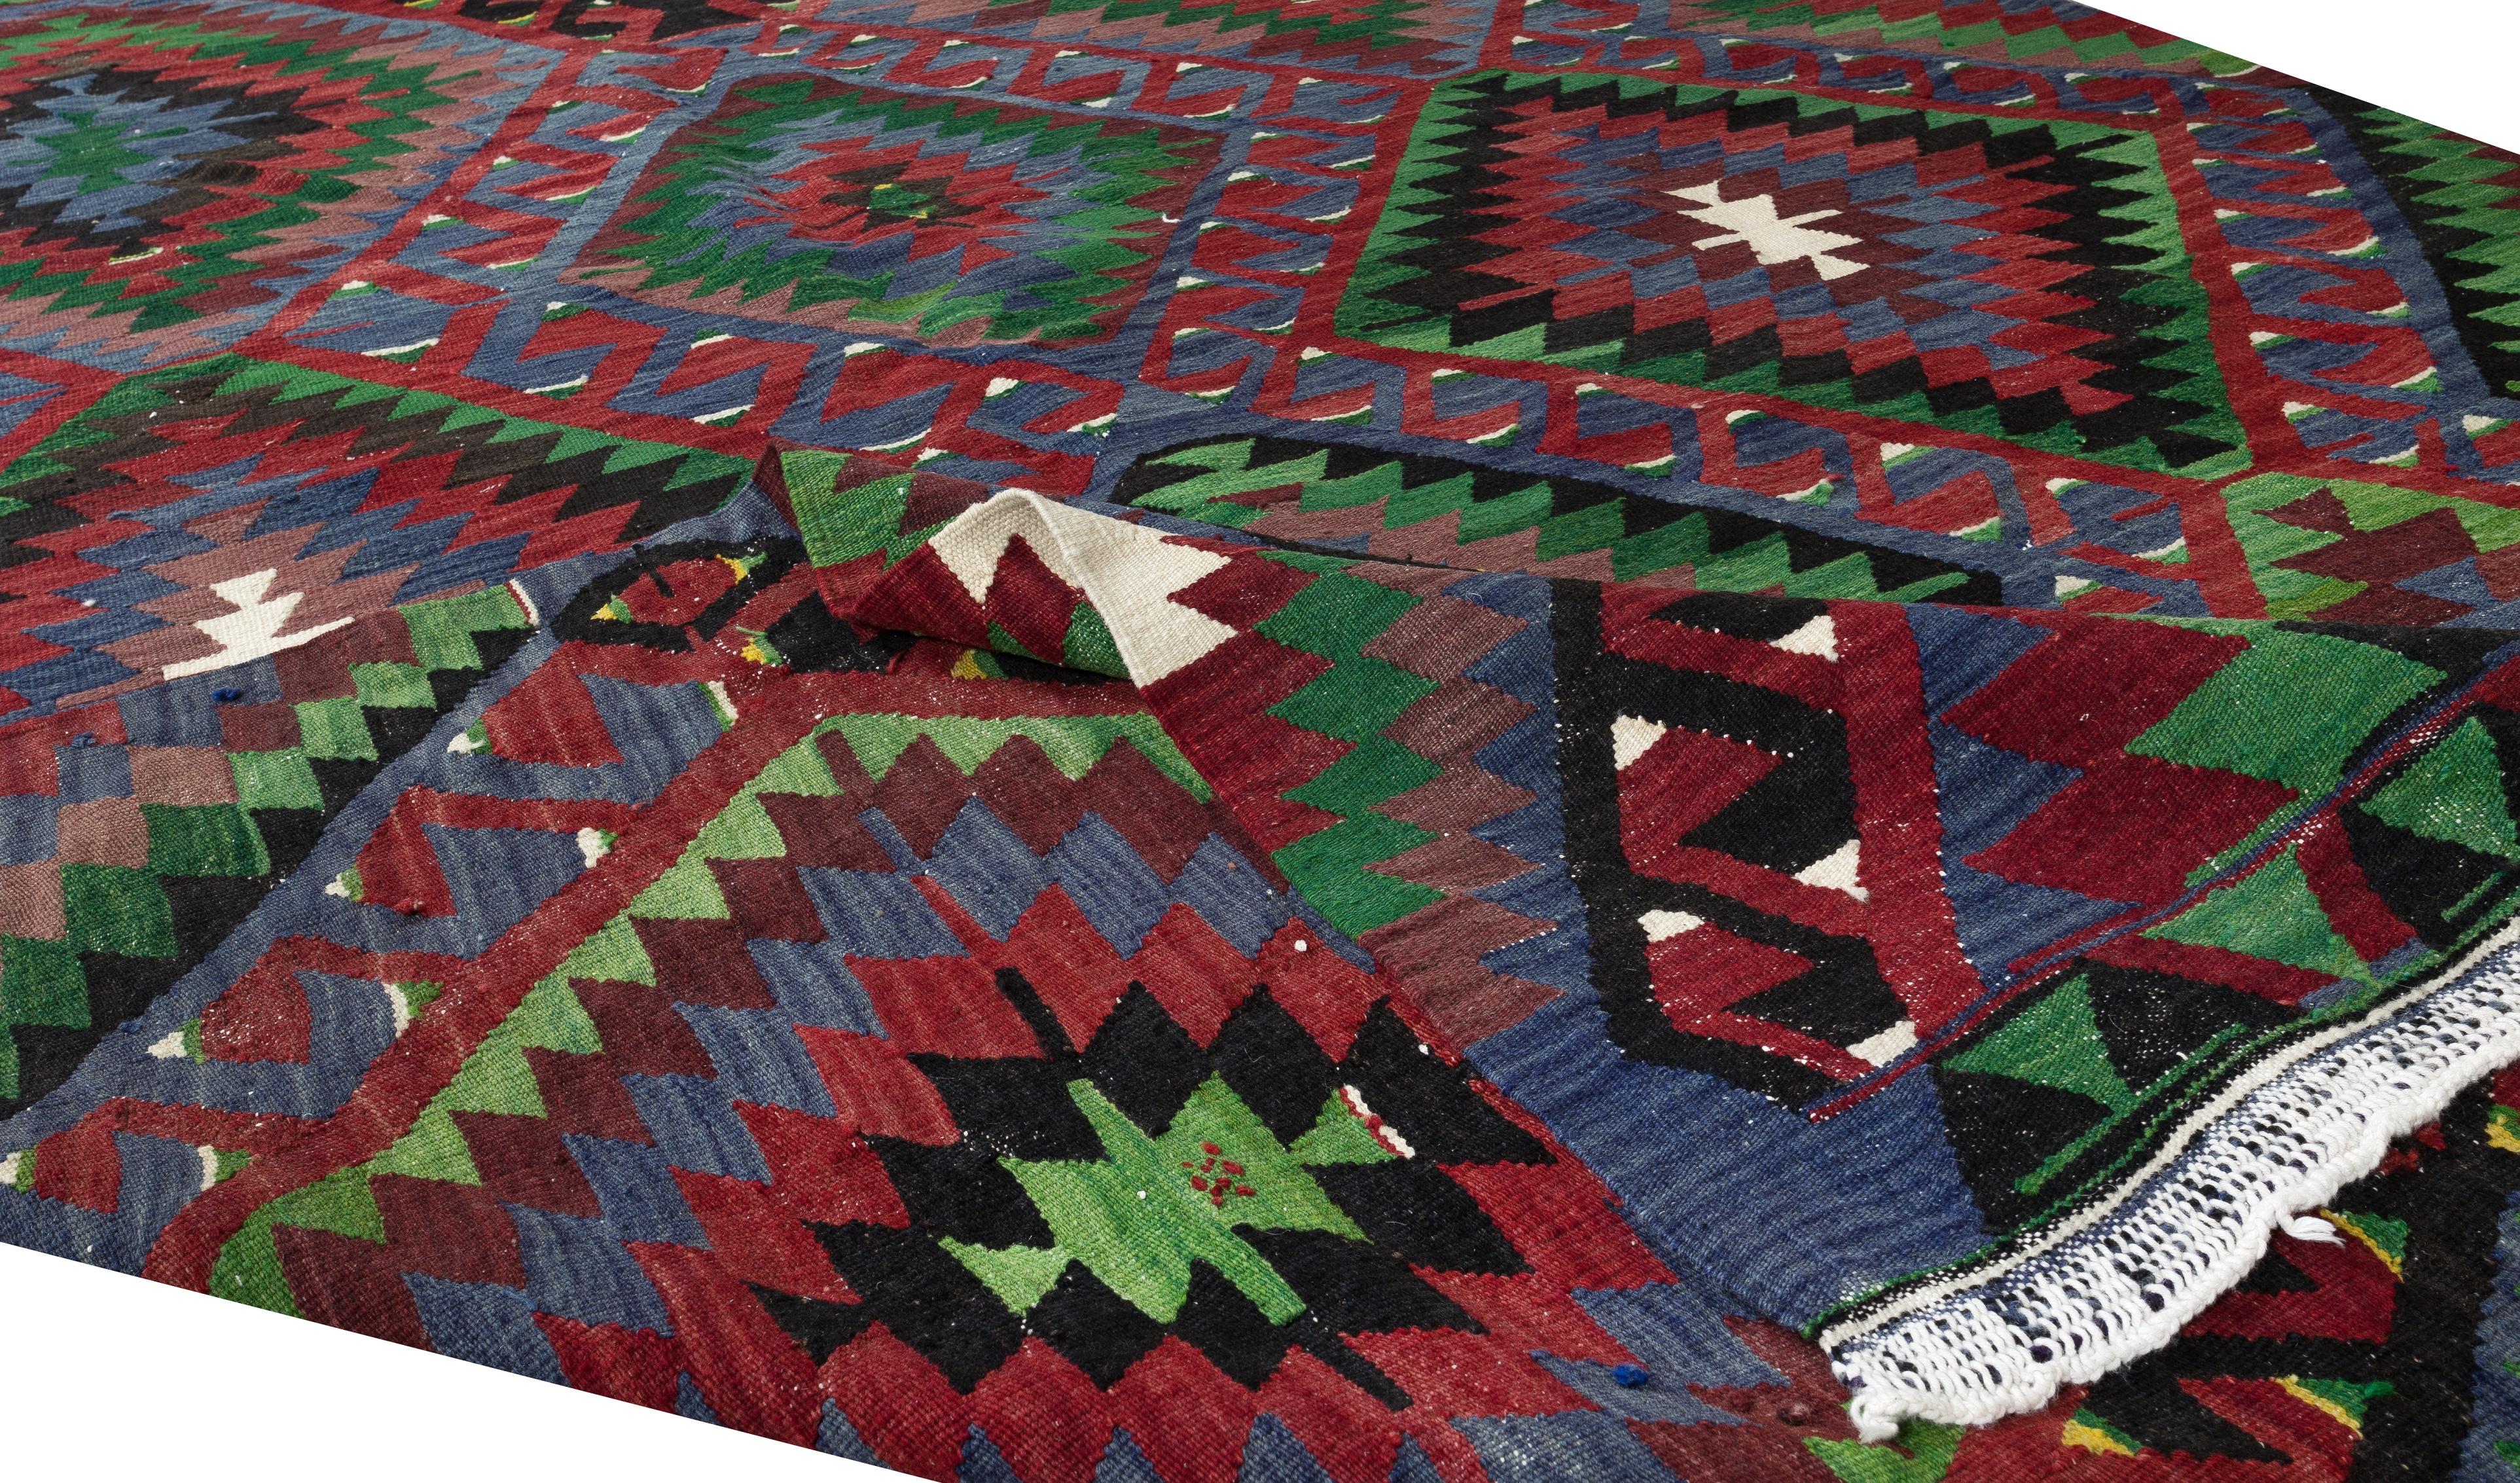 Hand-Woven 5.3x10.4 Ft Colorful Turkish Kilim with Hand-Spun Wool, Vintage Geometric Rug For Sale